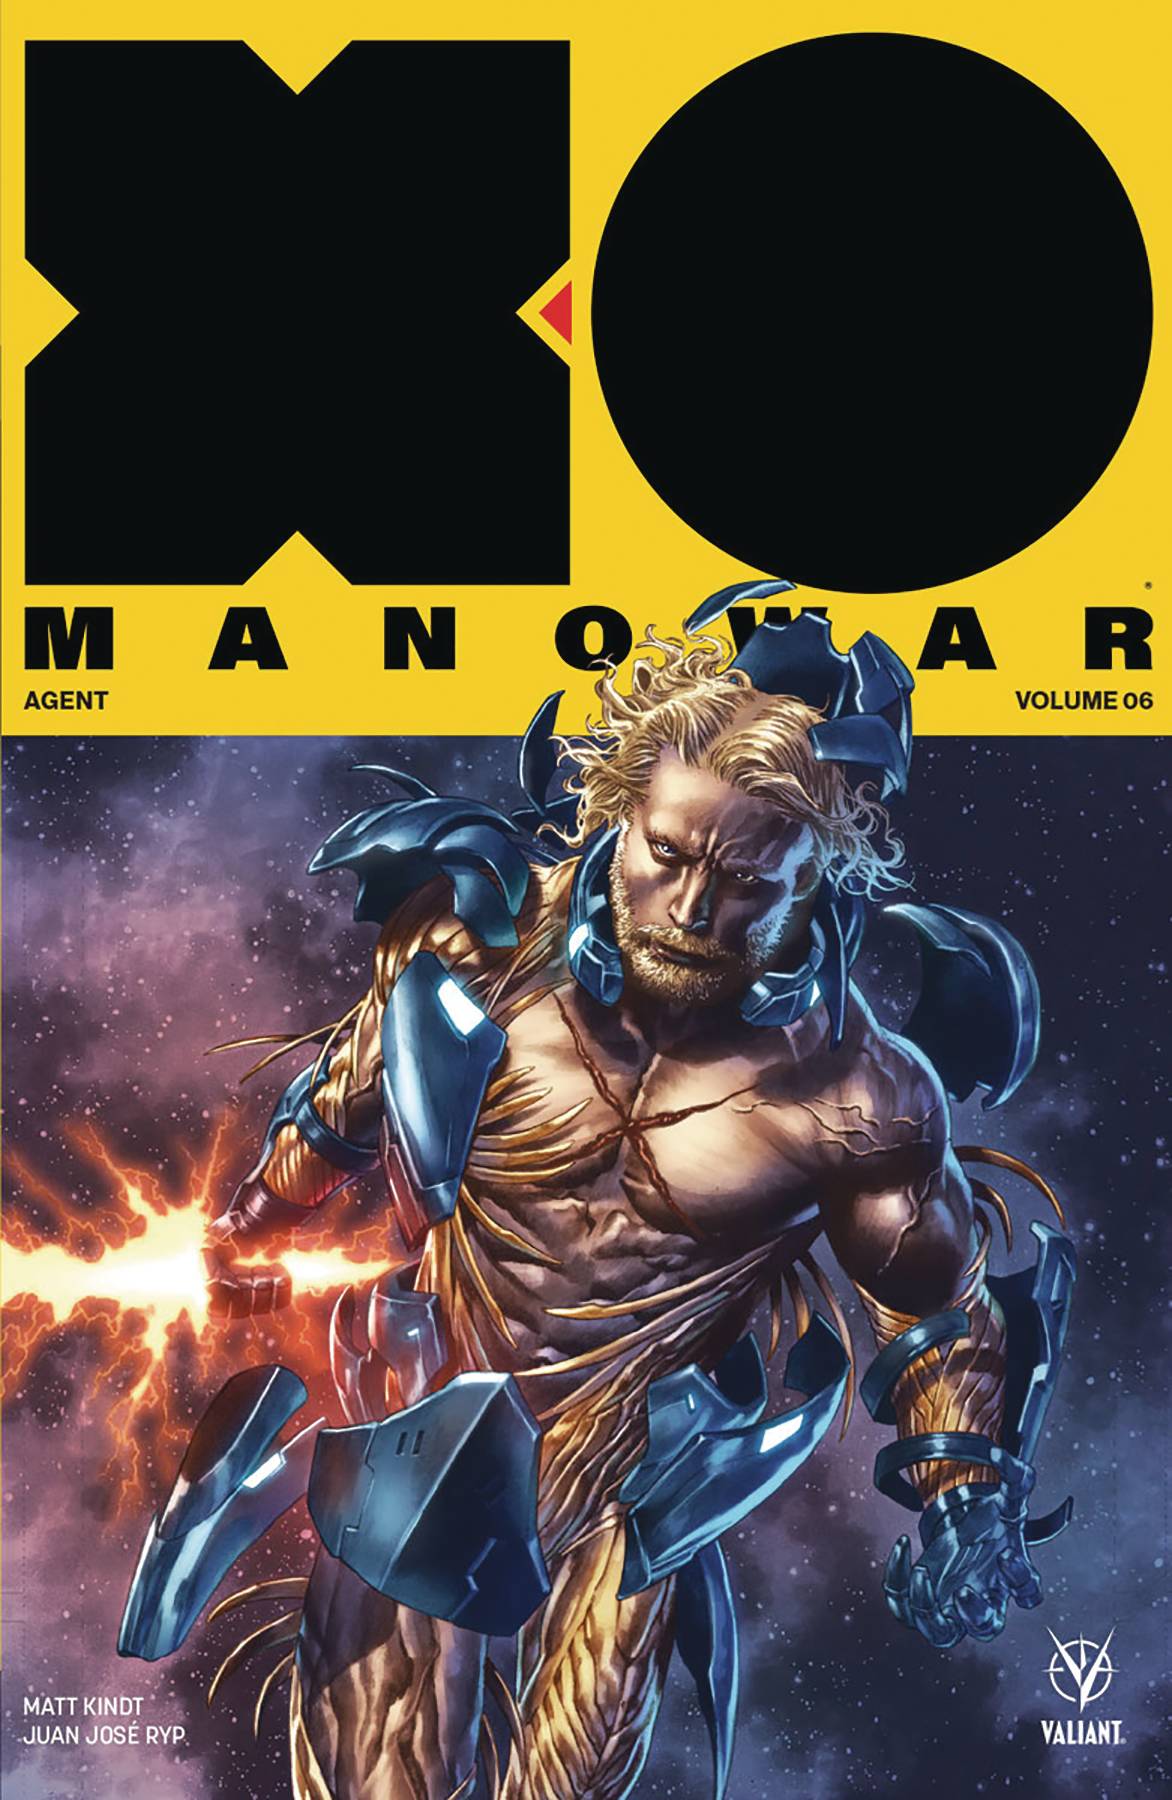 X-O Manowar Graphic Novel Volume 6 Agent (2017)